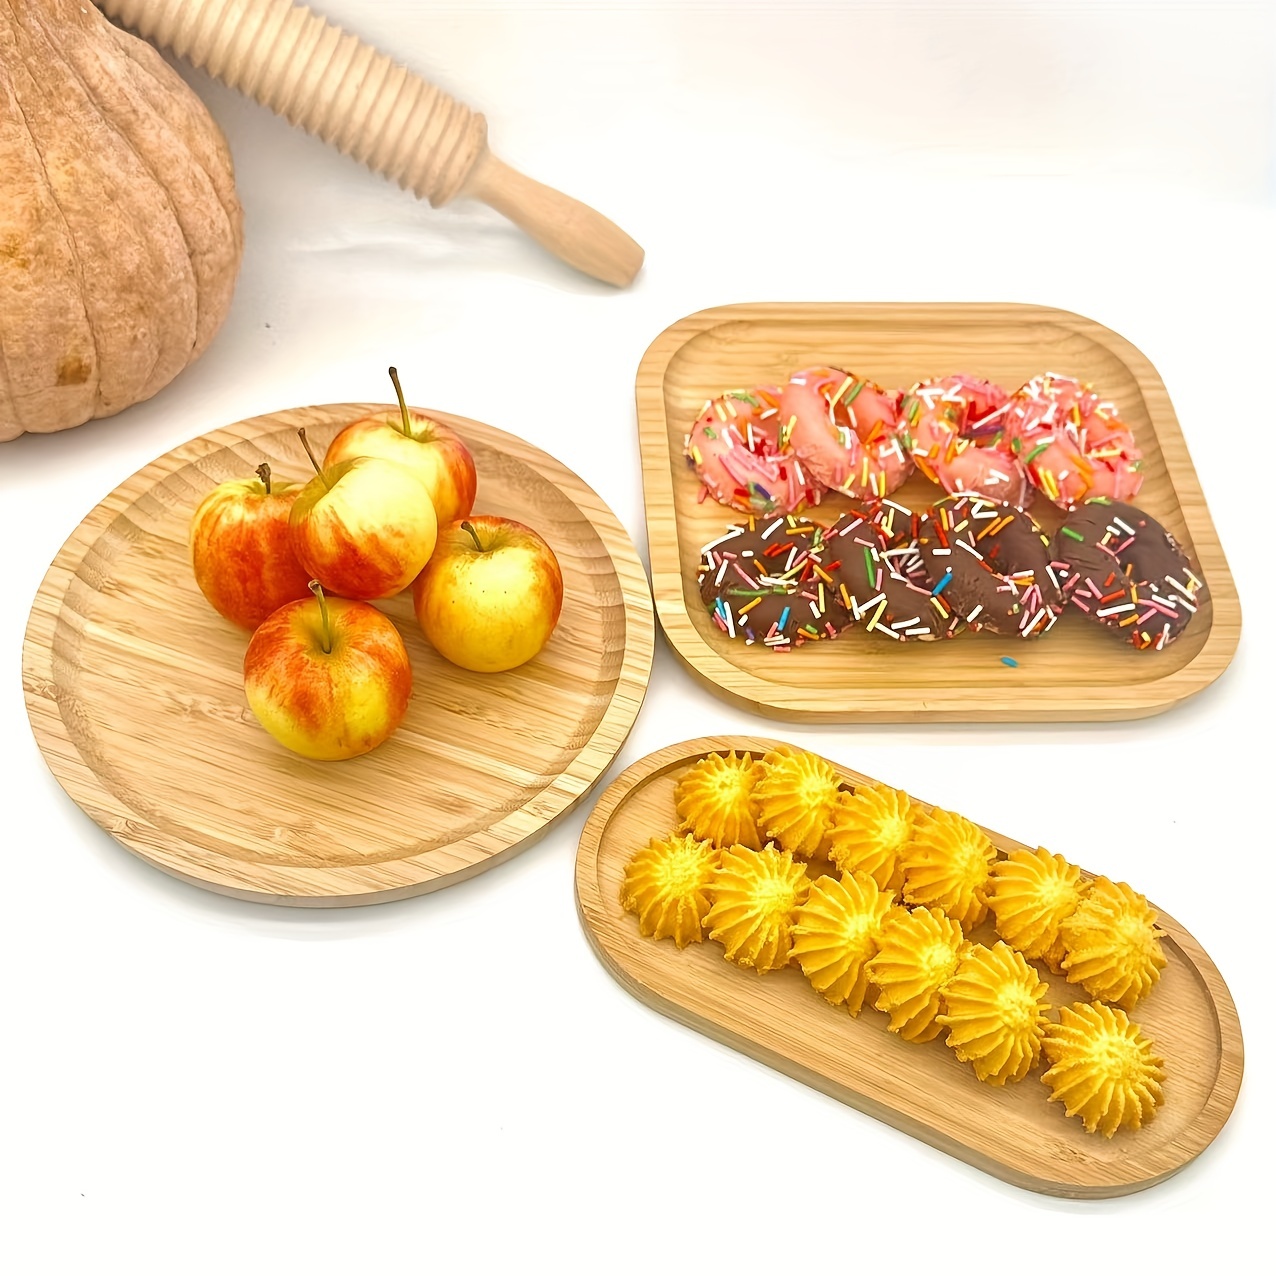 2 platos rectangulares de madera para fiestas de comida, bandeja decorativa  pequeña para servir queso de madera de acacia, tablero de charcutería